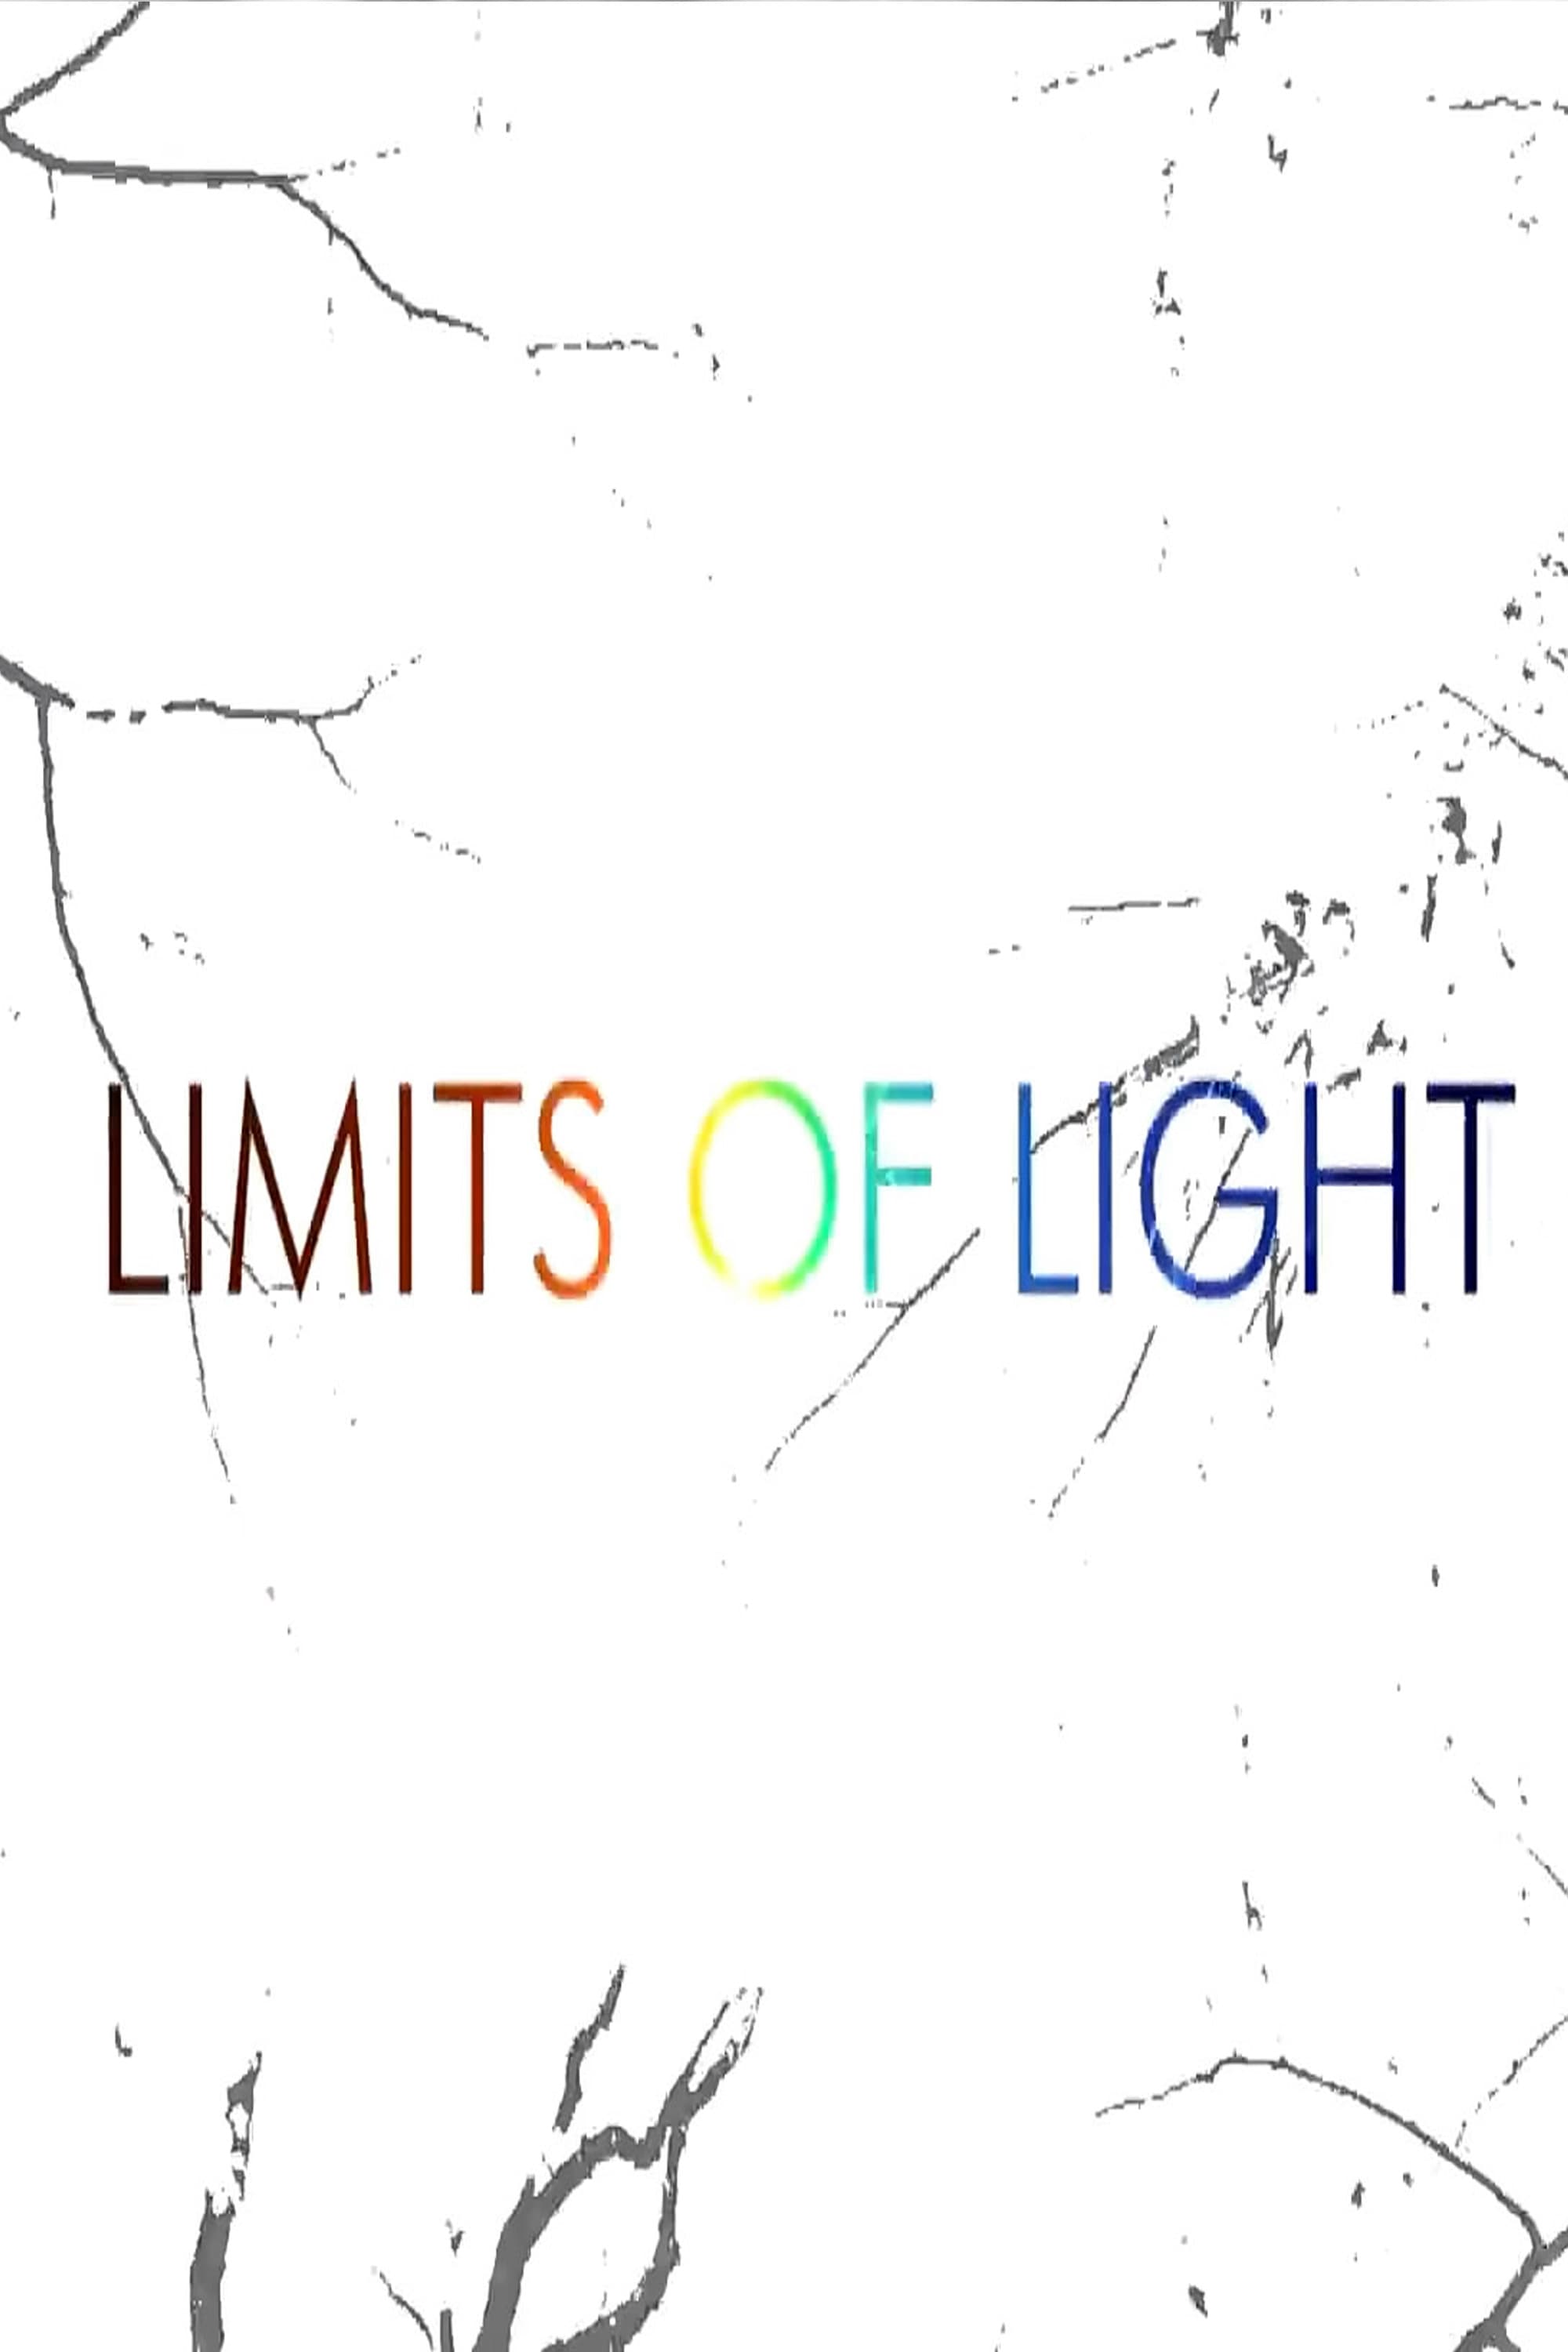 Limits of Light